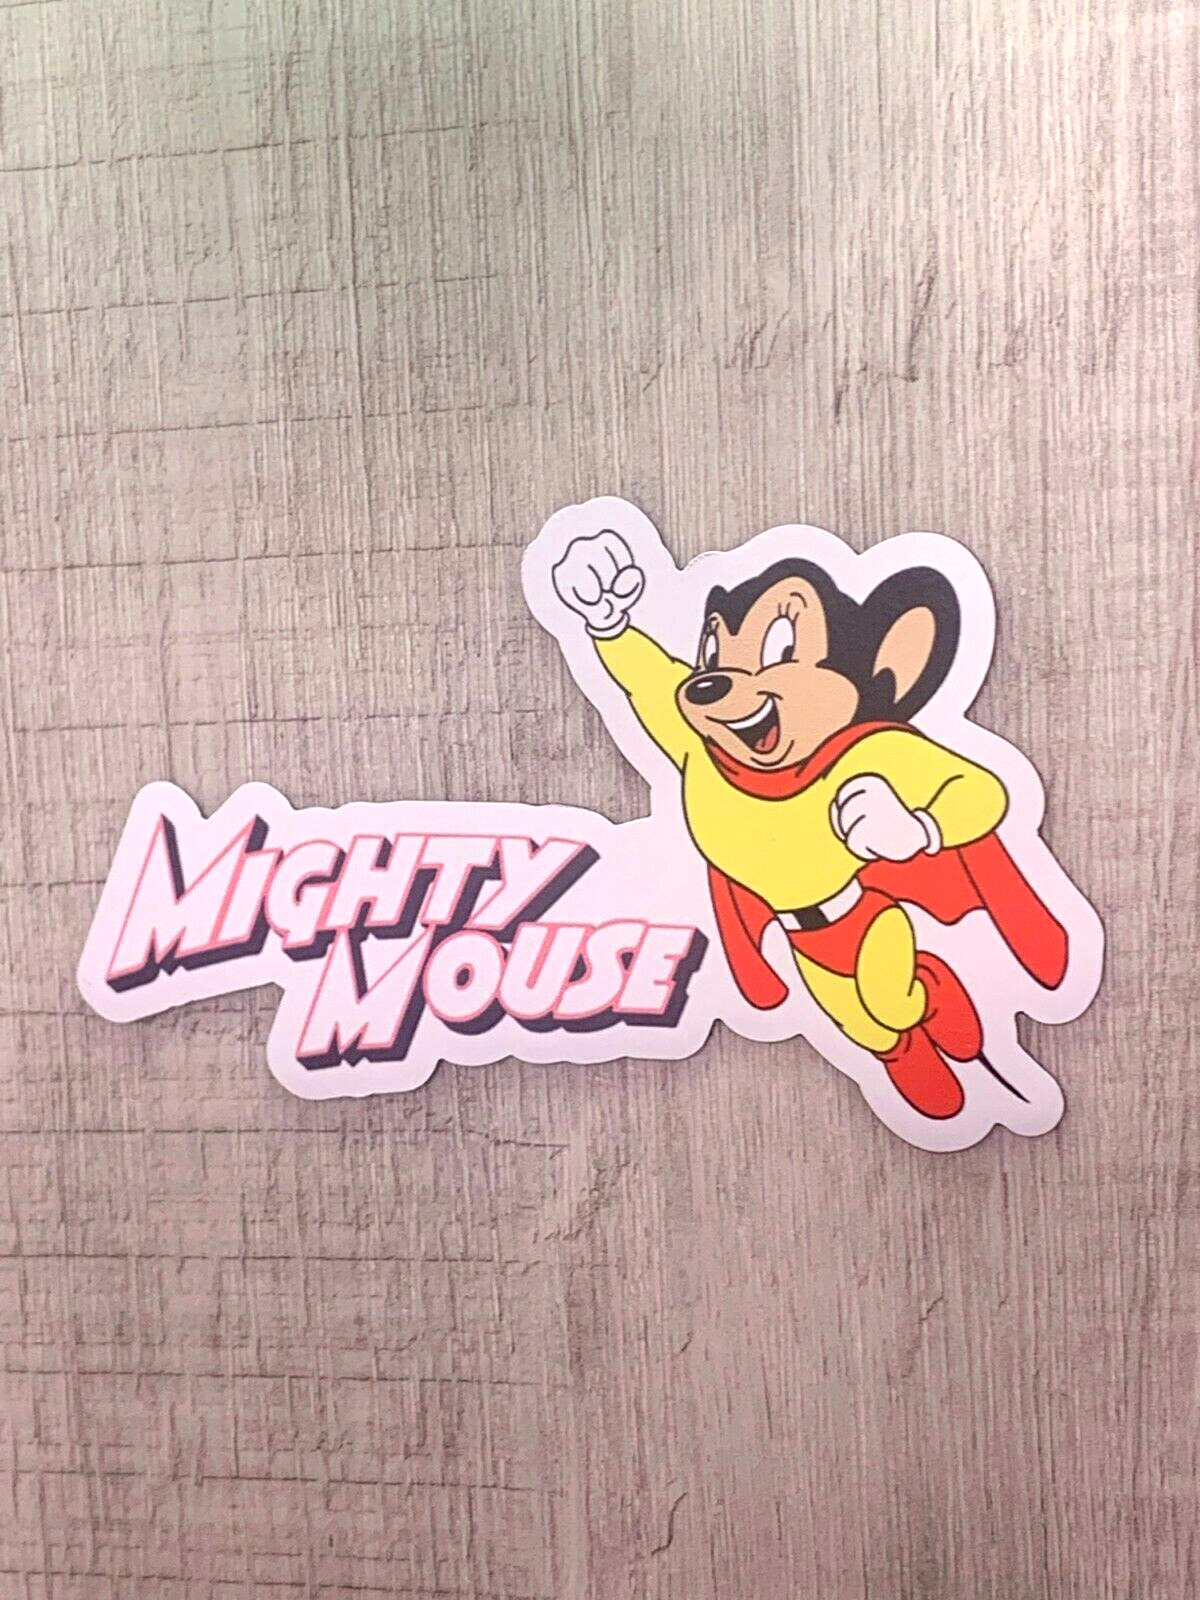 2022 Mighty Mouse~Magnet Retro Themed Nostalgic Cartoon frig Locker Magnet 